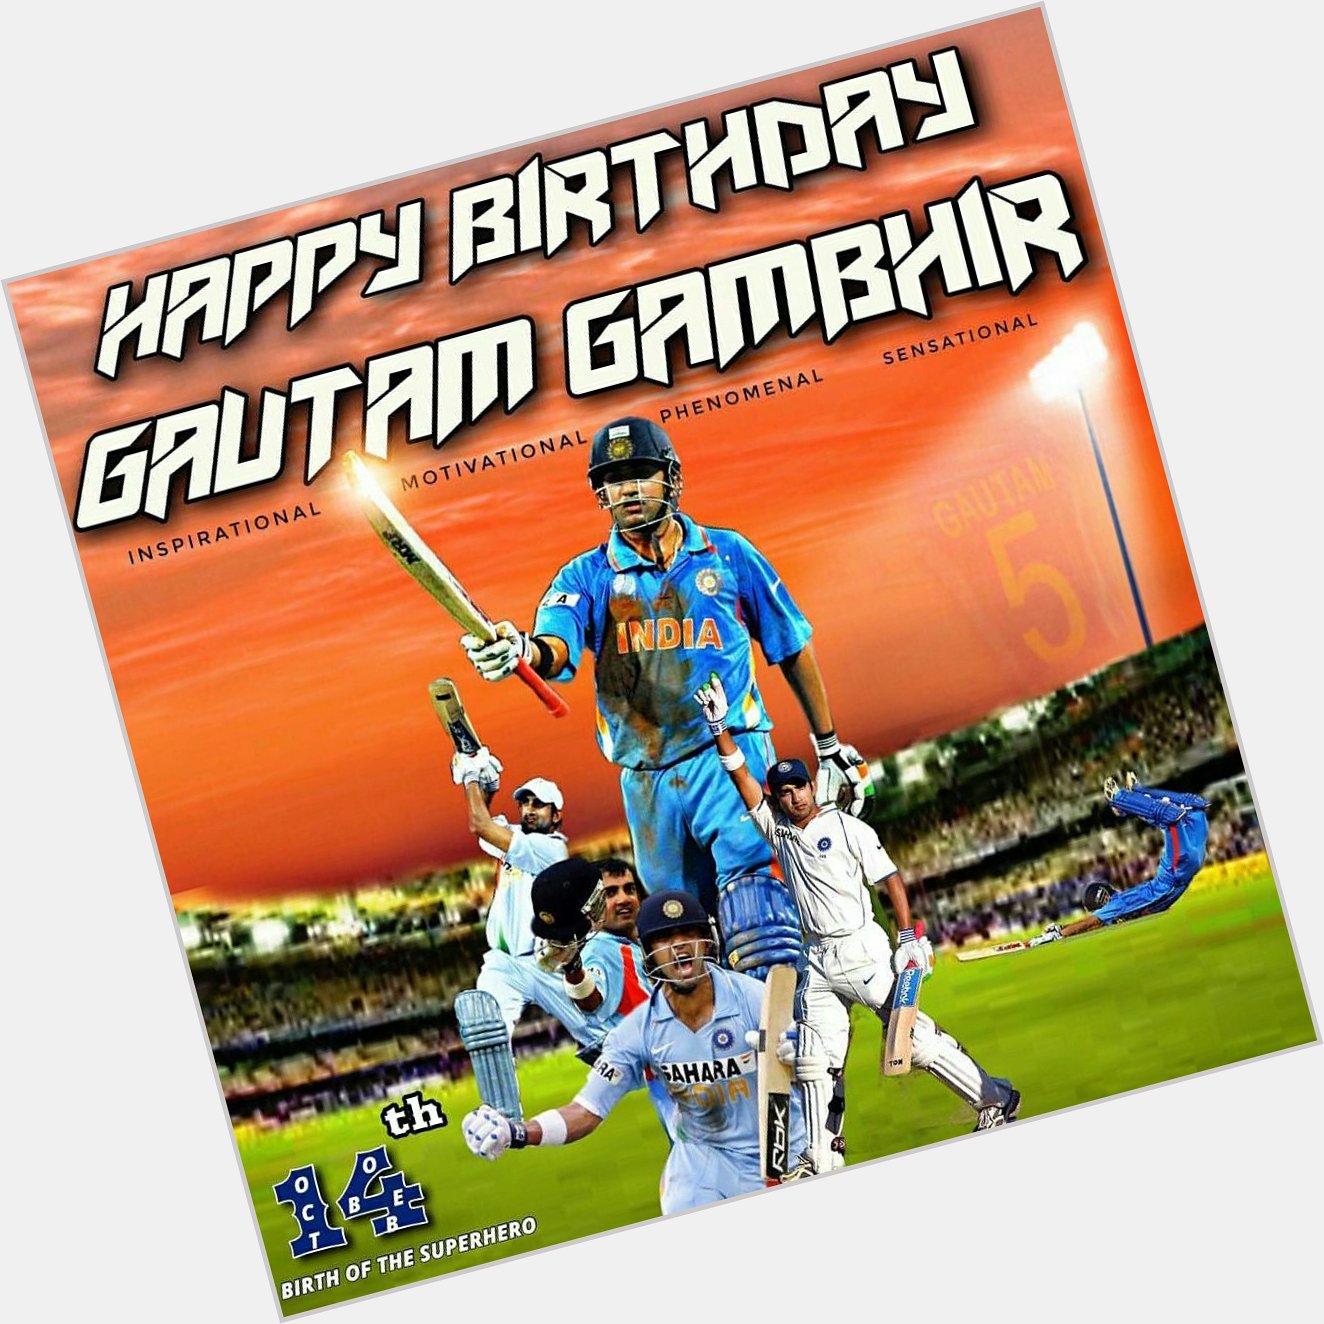 Happy birthday gautam gambhir 